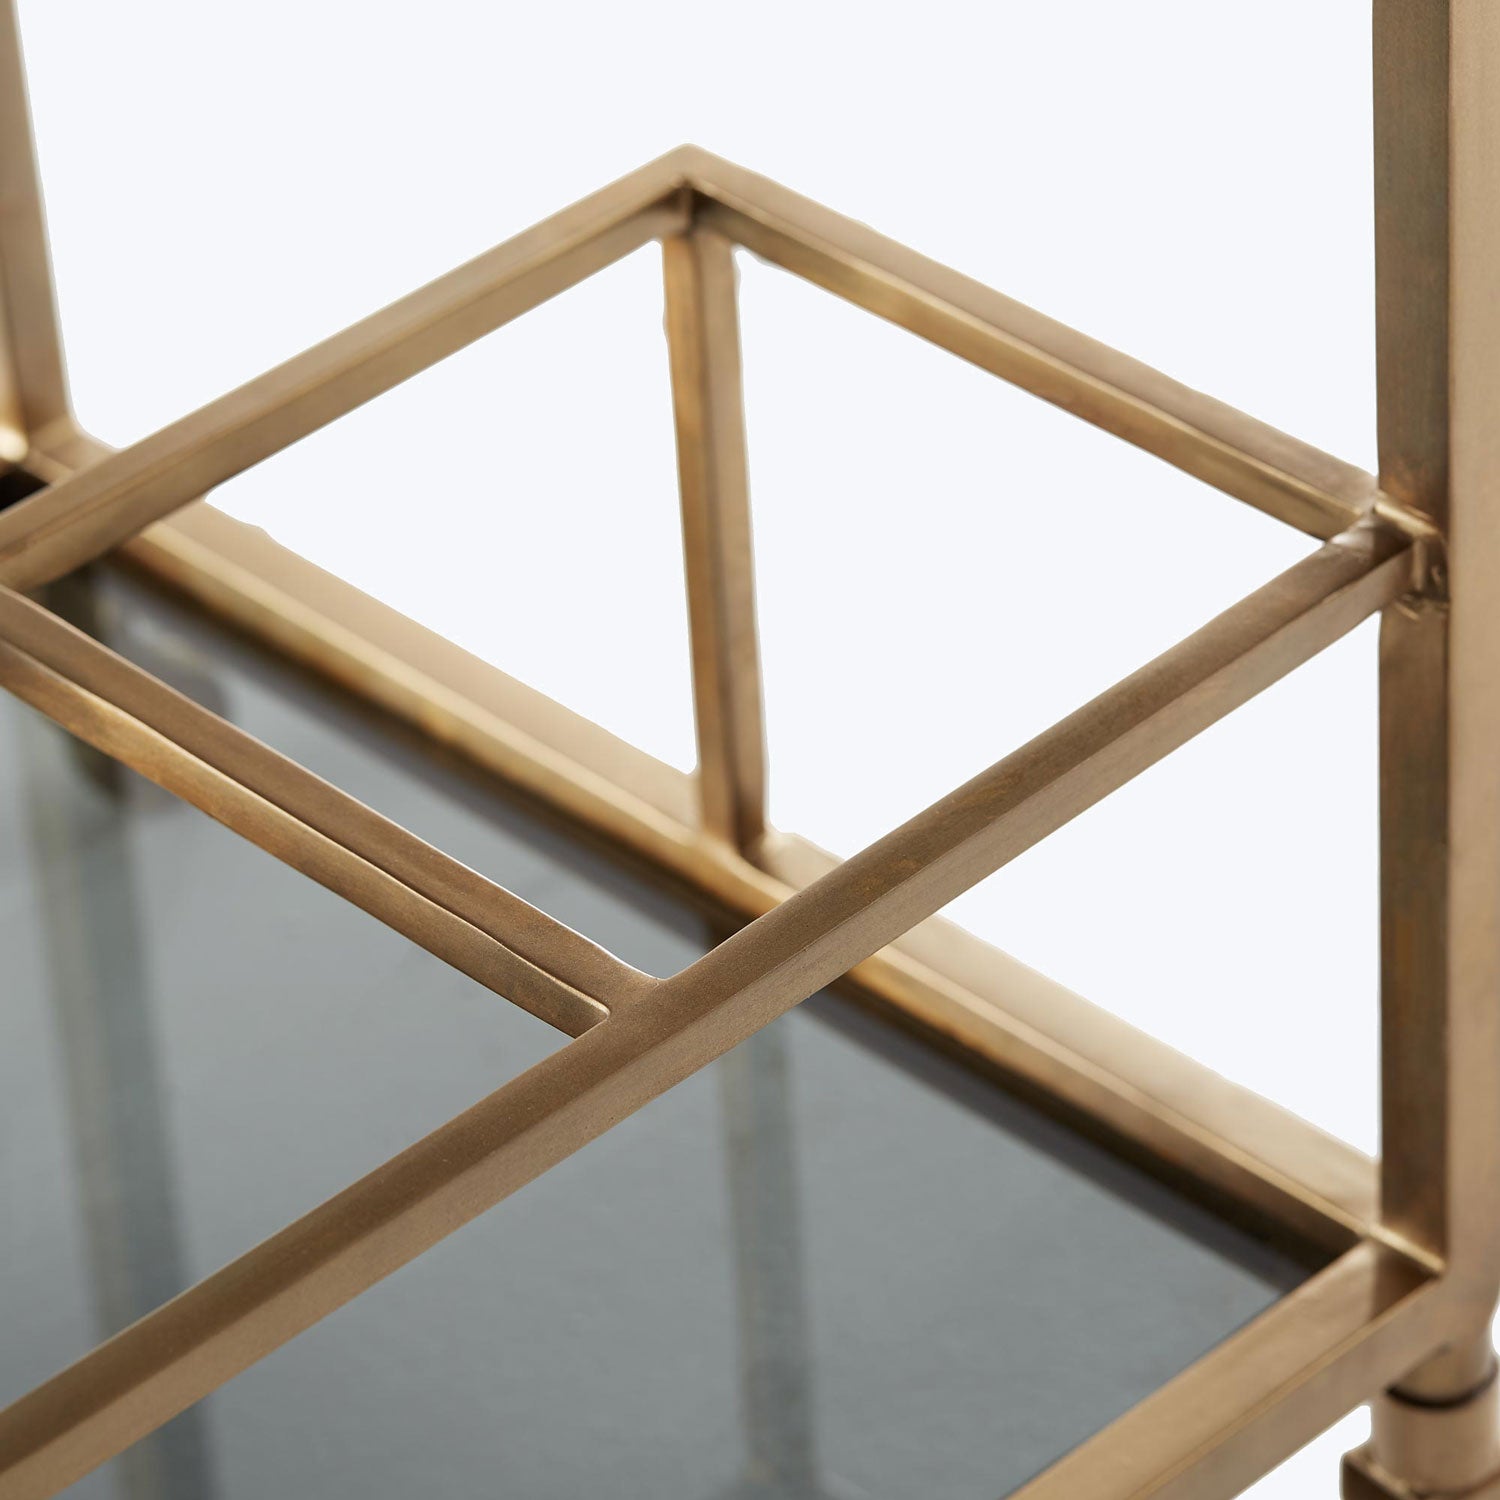 Close-up of a gold metallic frame in angular design.